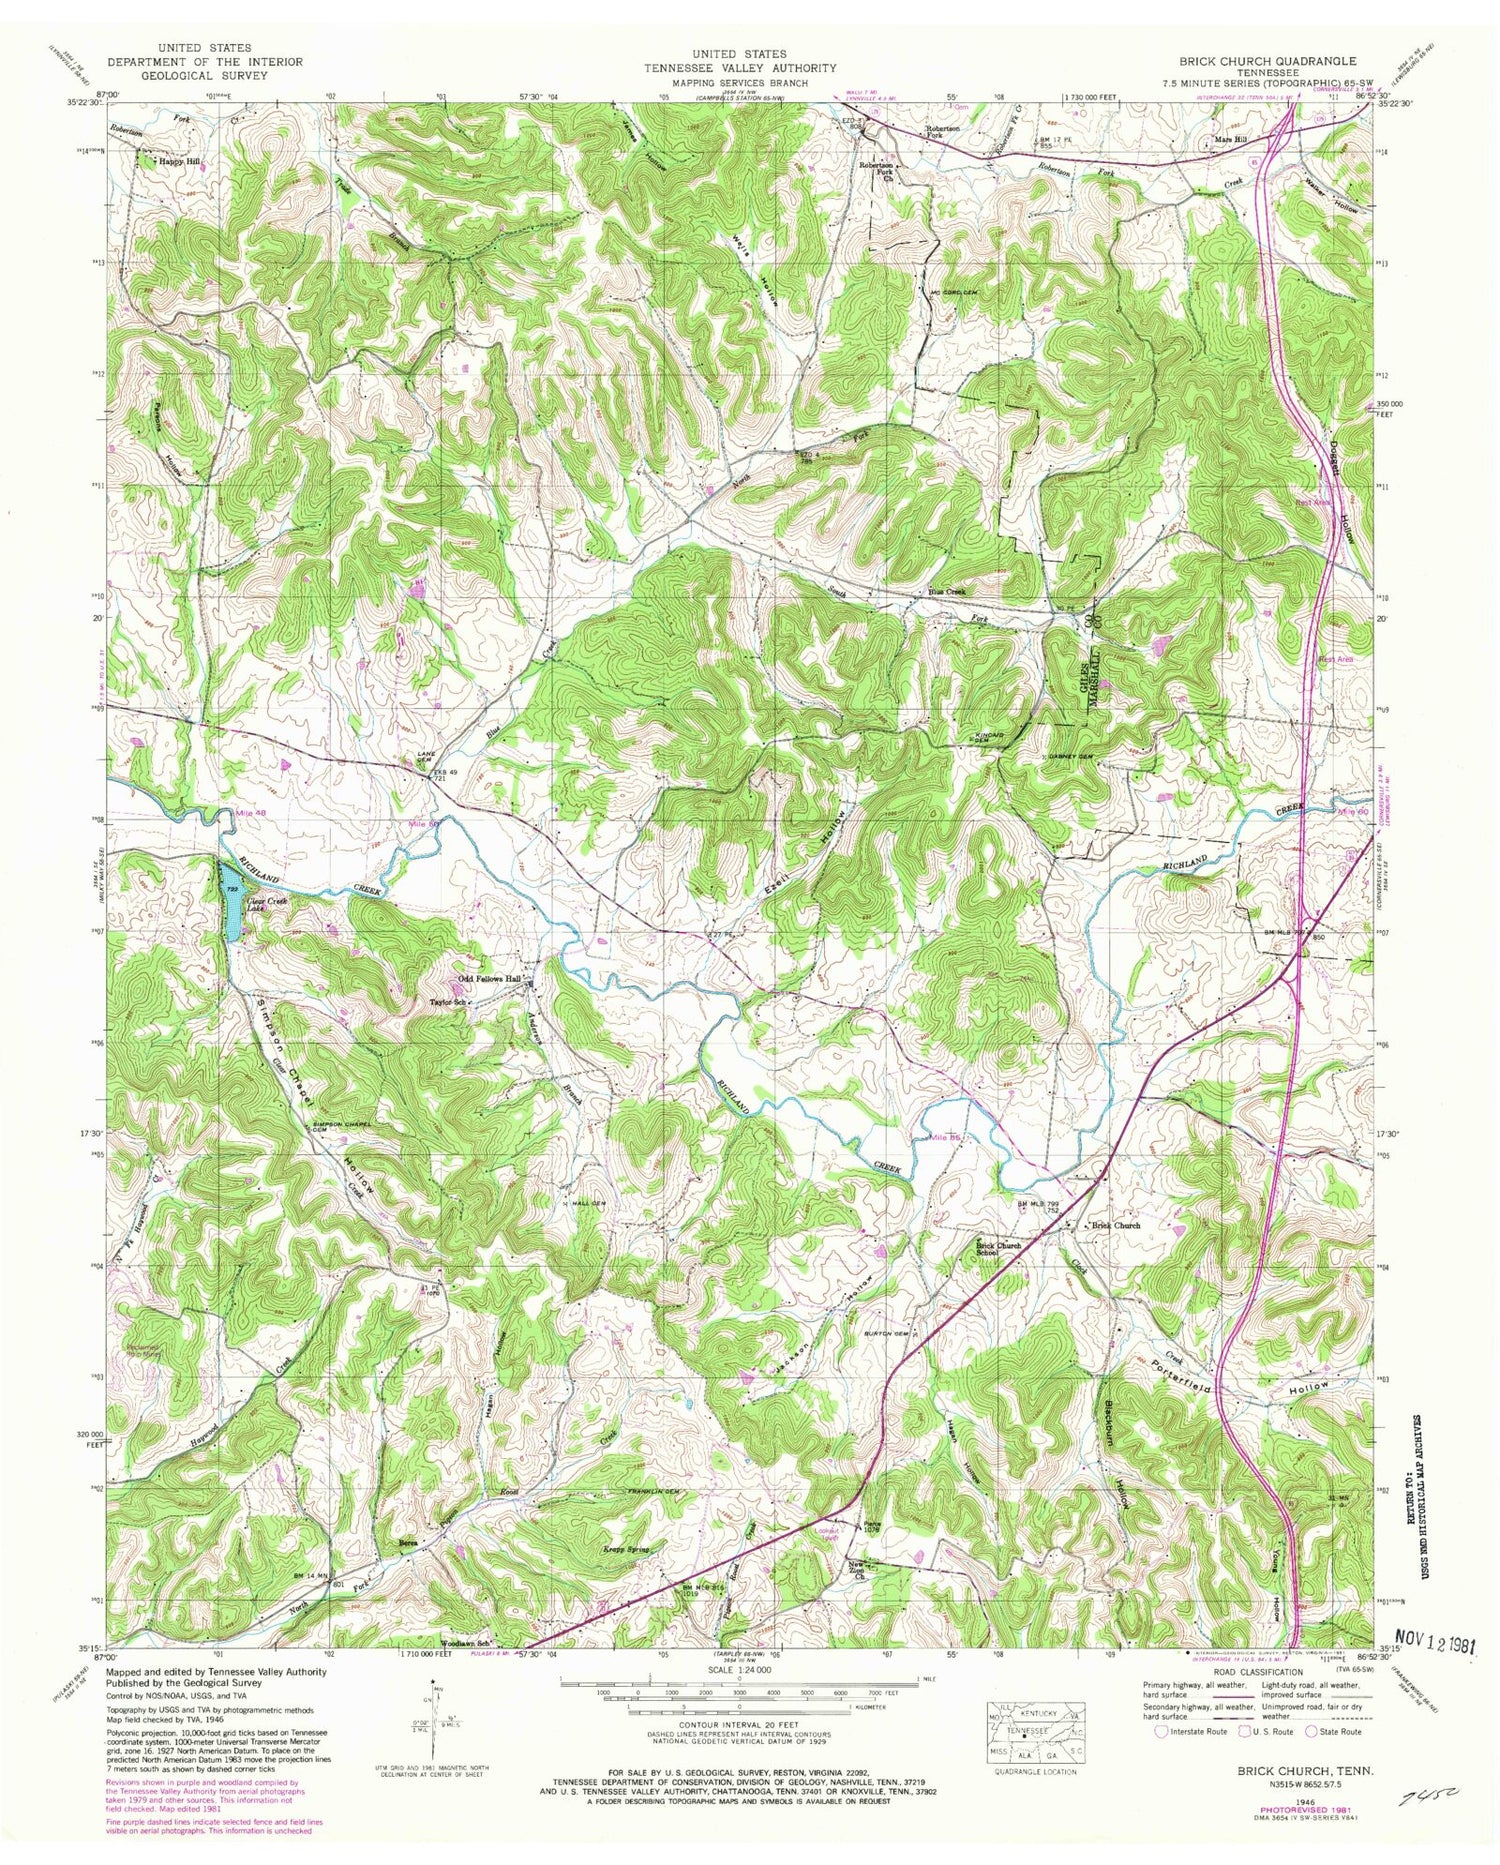 Classic USGS Brick Church Tennessee 7.5'x7.5' Topo Map Image